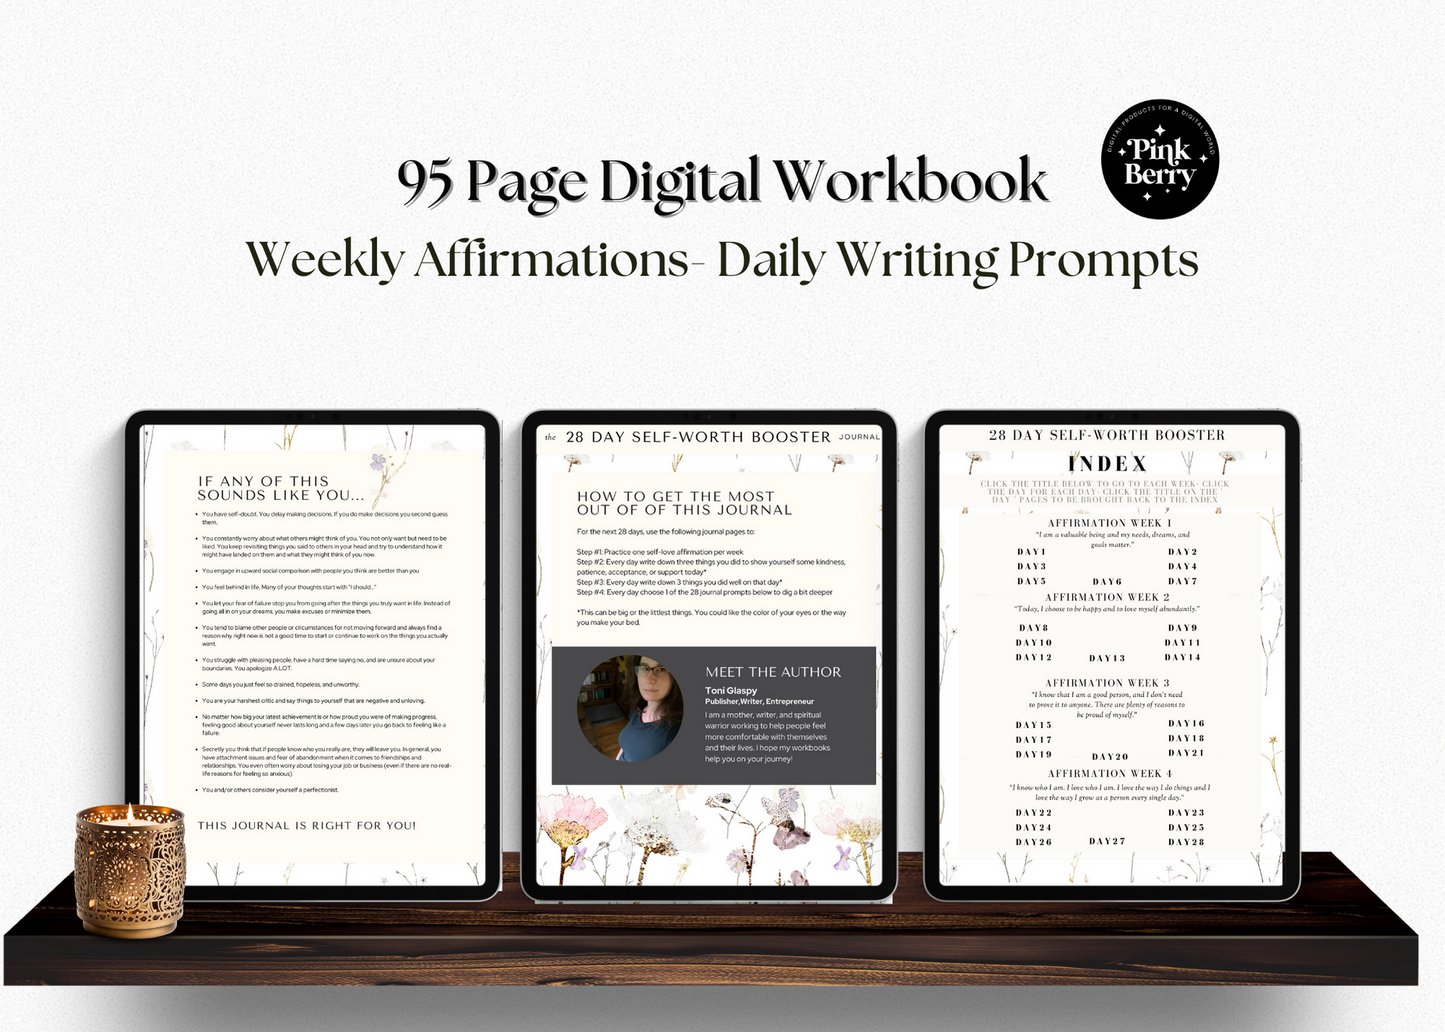 Self Worth Digital Workbook- The Self Development Project- 95 Page Goodnotes Digital Workbook